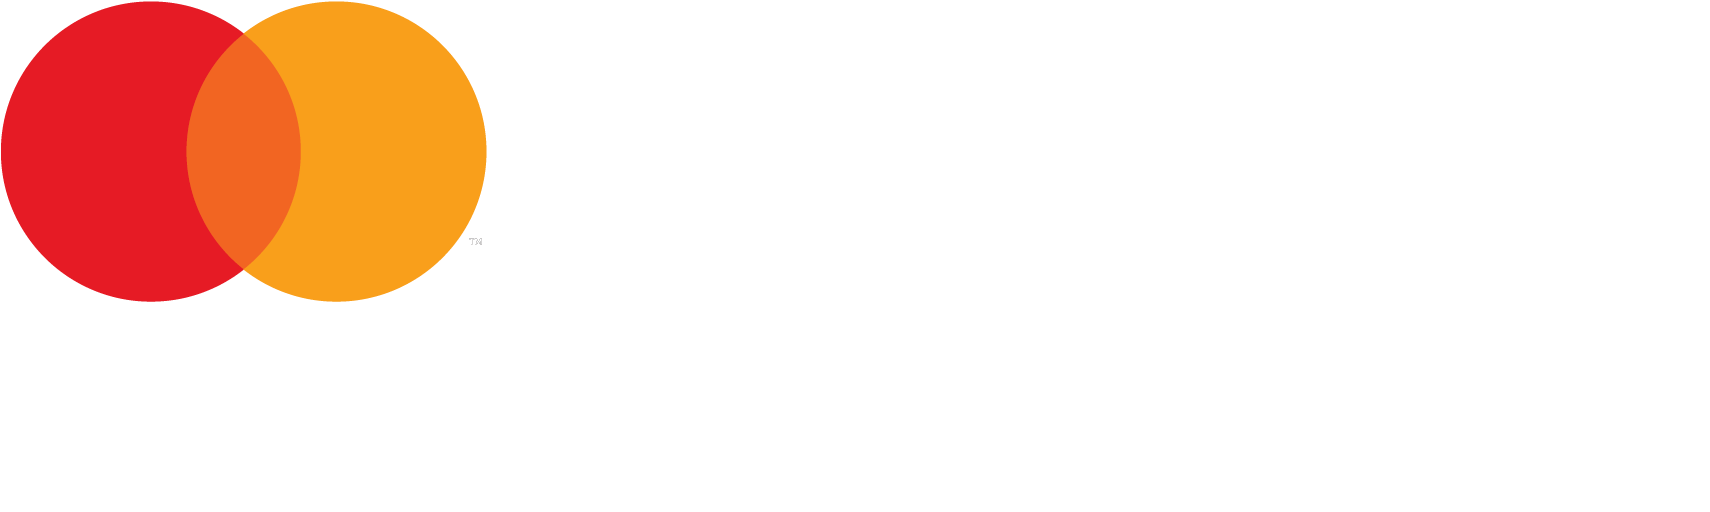 Mastercard Foundation Scholars Program Logo PNG